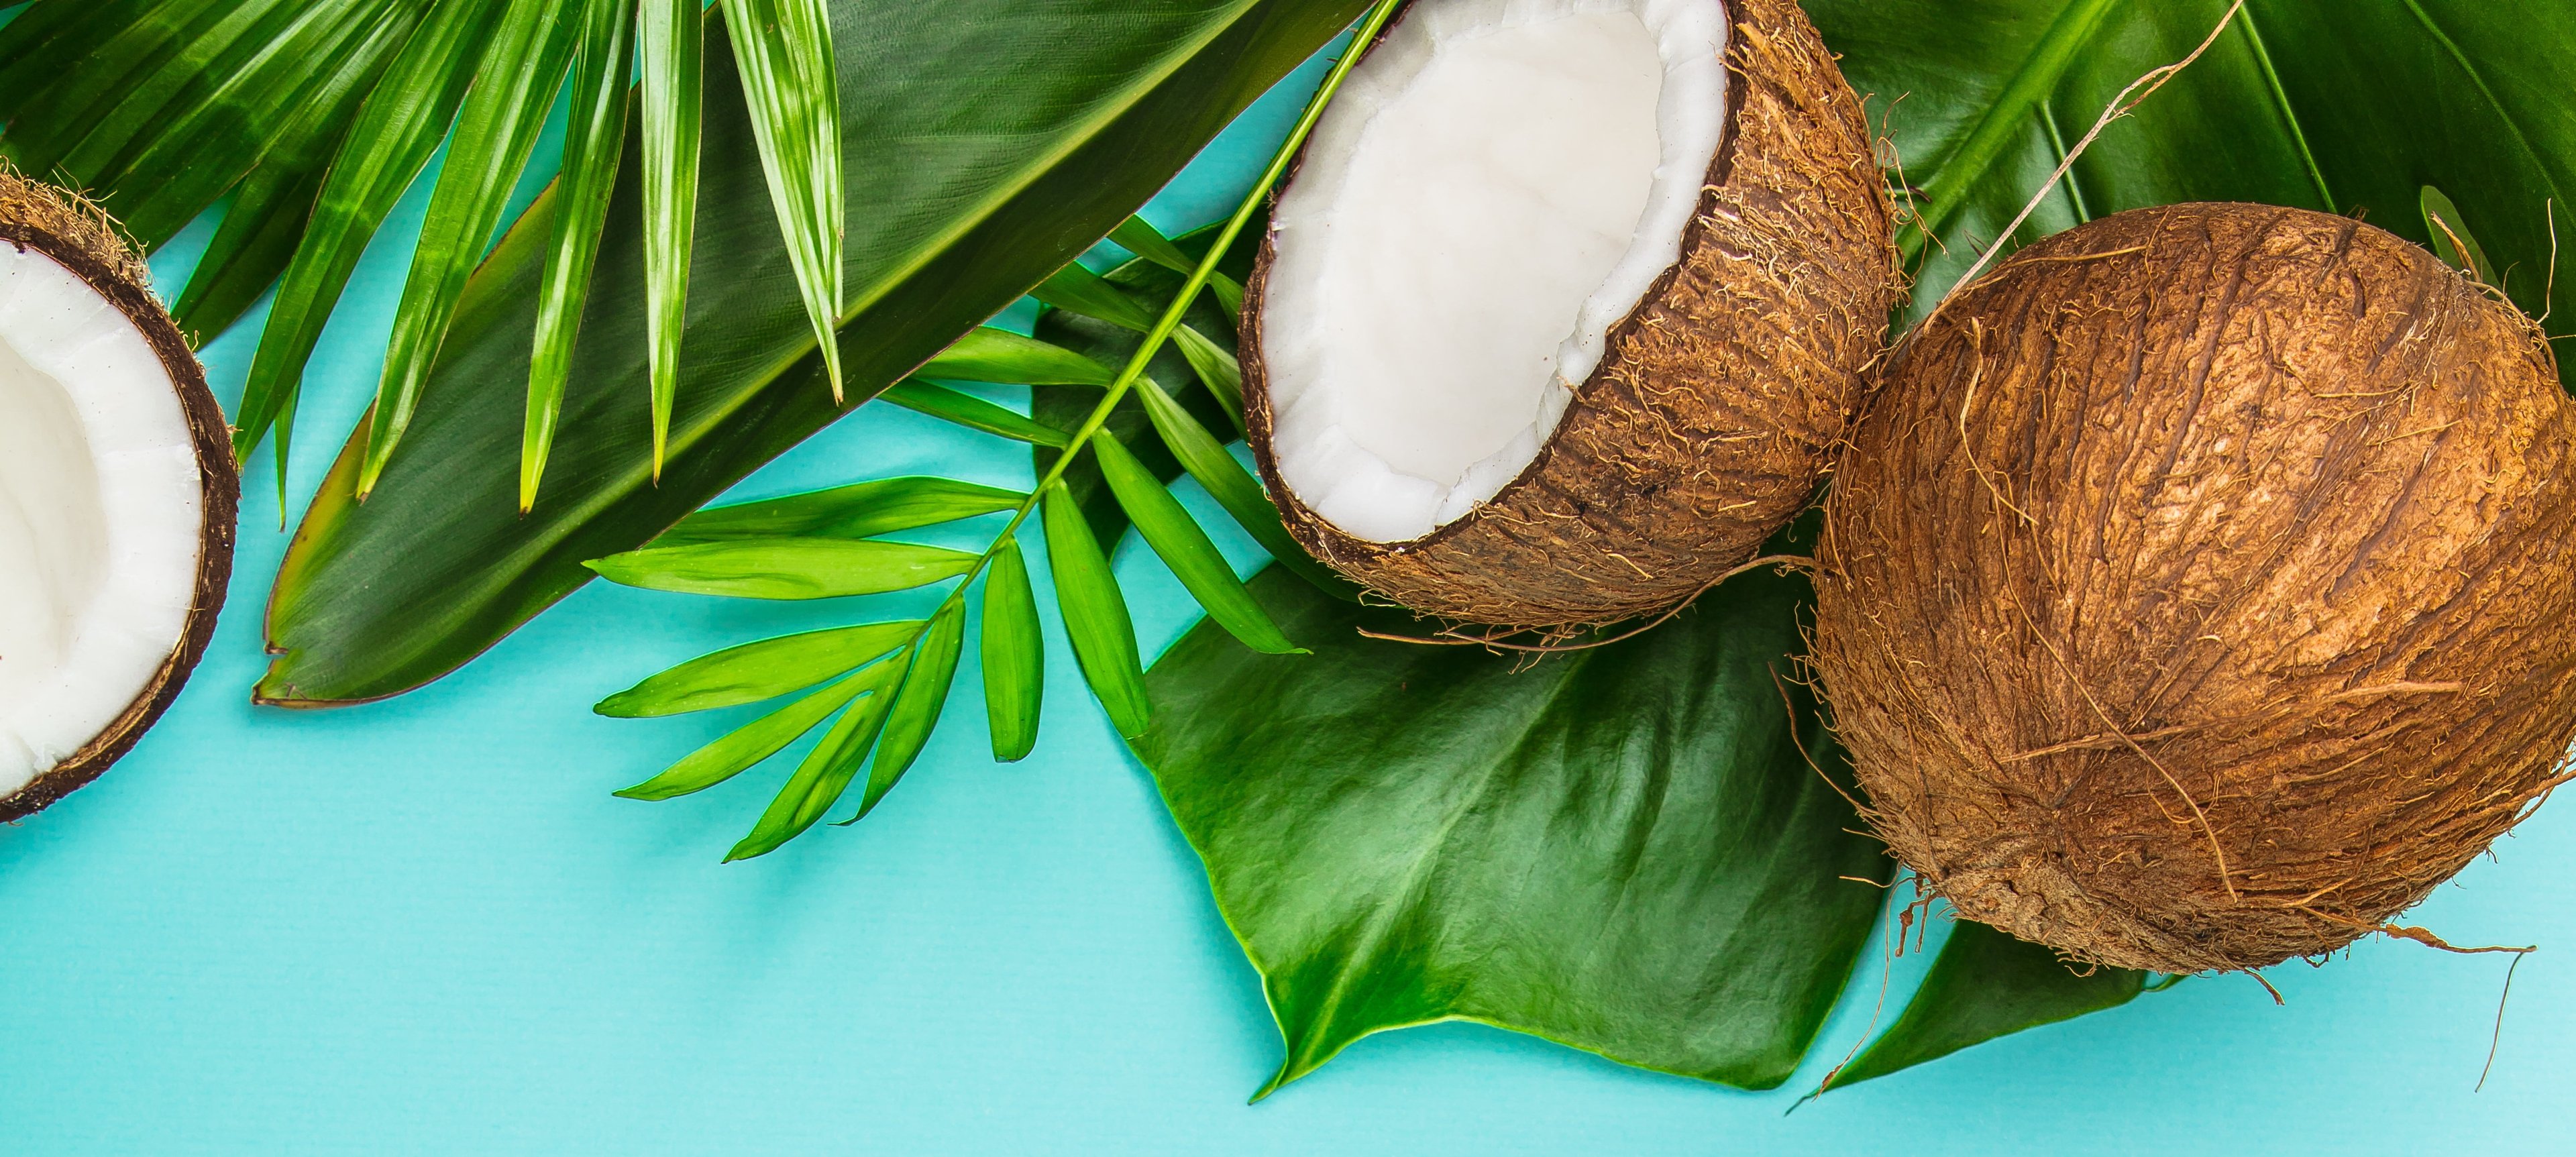 Benefícios da polpa do côco verde para a saúde Coco Propriedades E Beneficios Da Fruta Cuidai